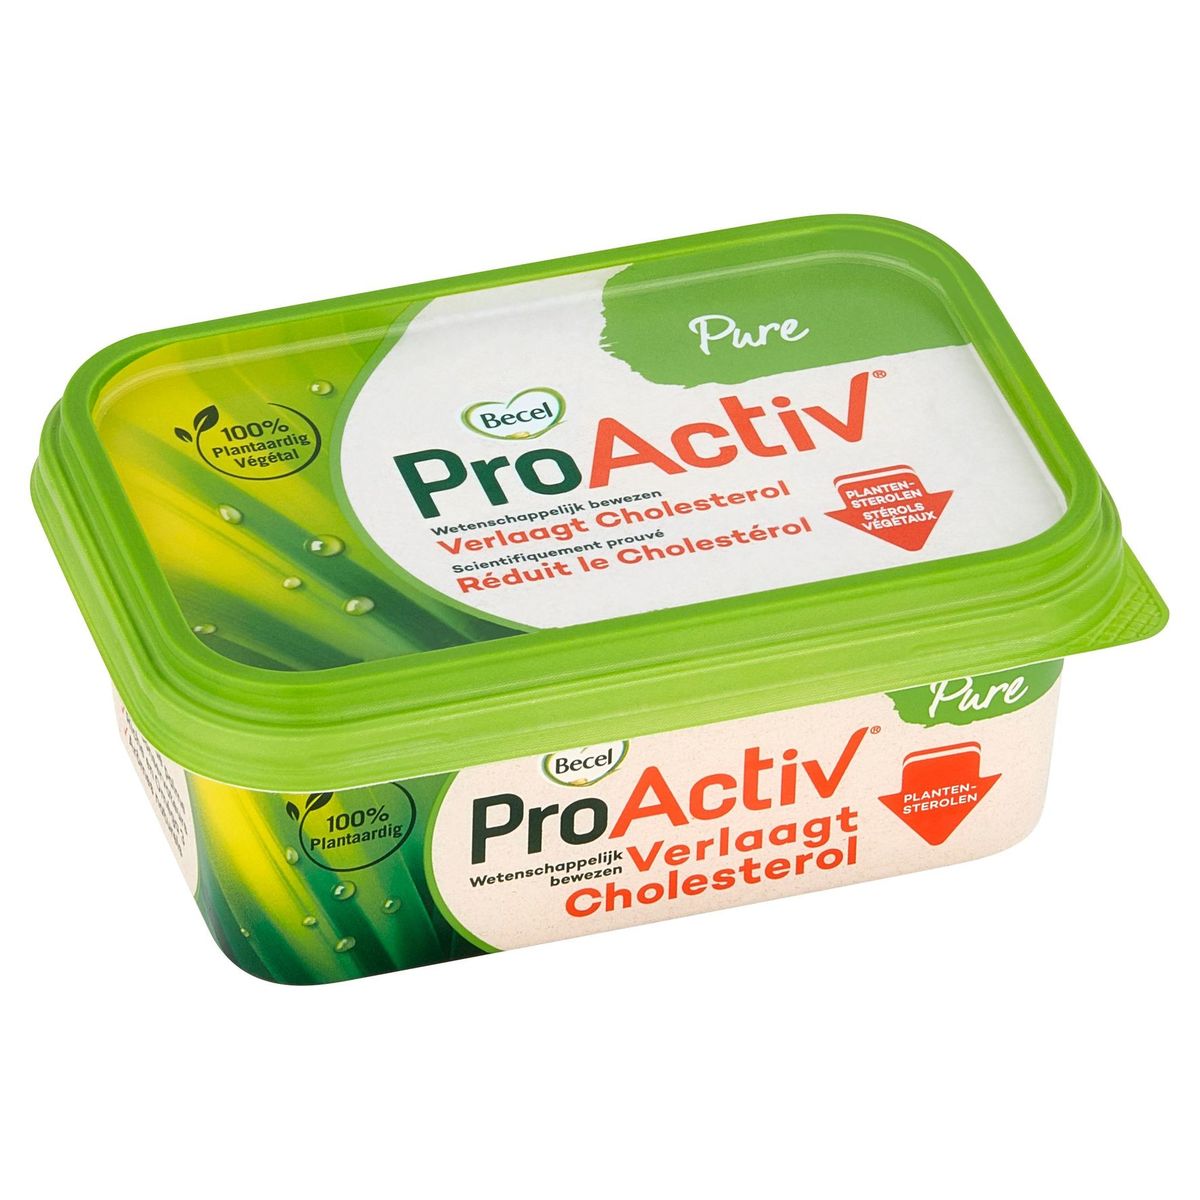 ProActiv | Verlaagt cholesterol | Pure | 250g